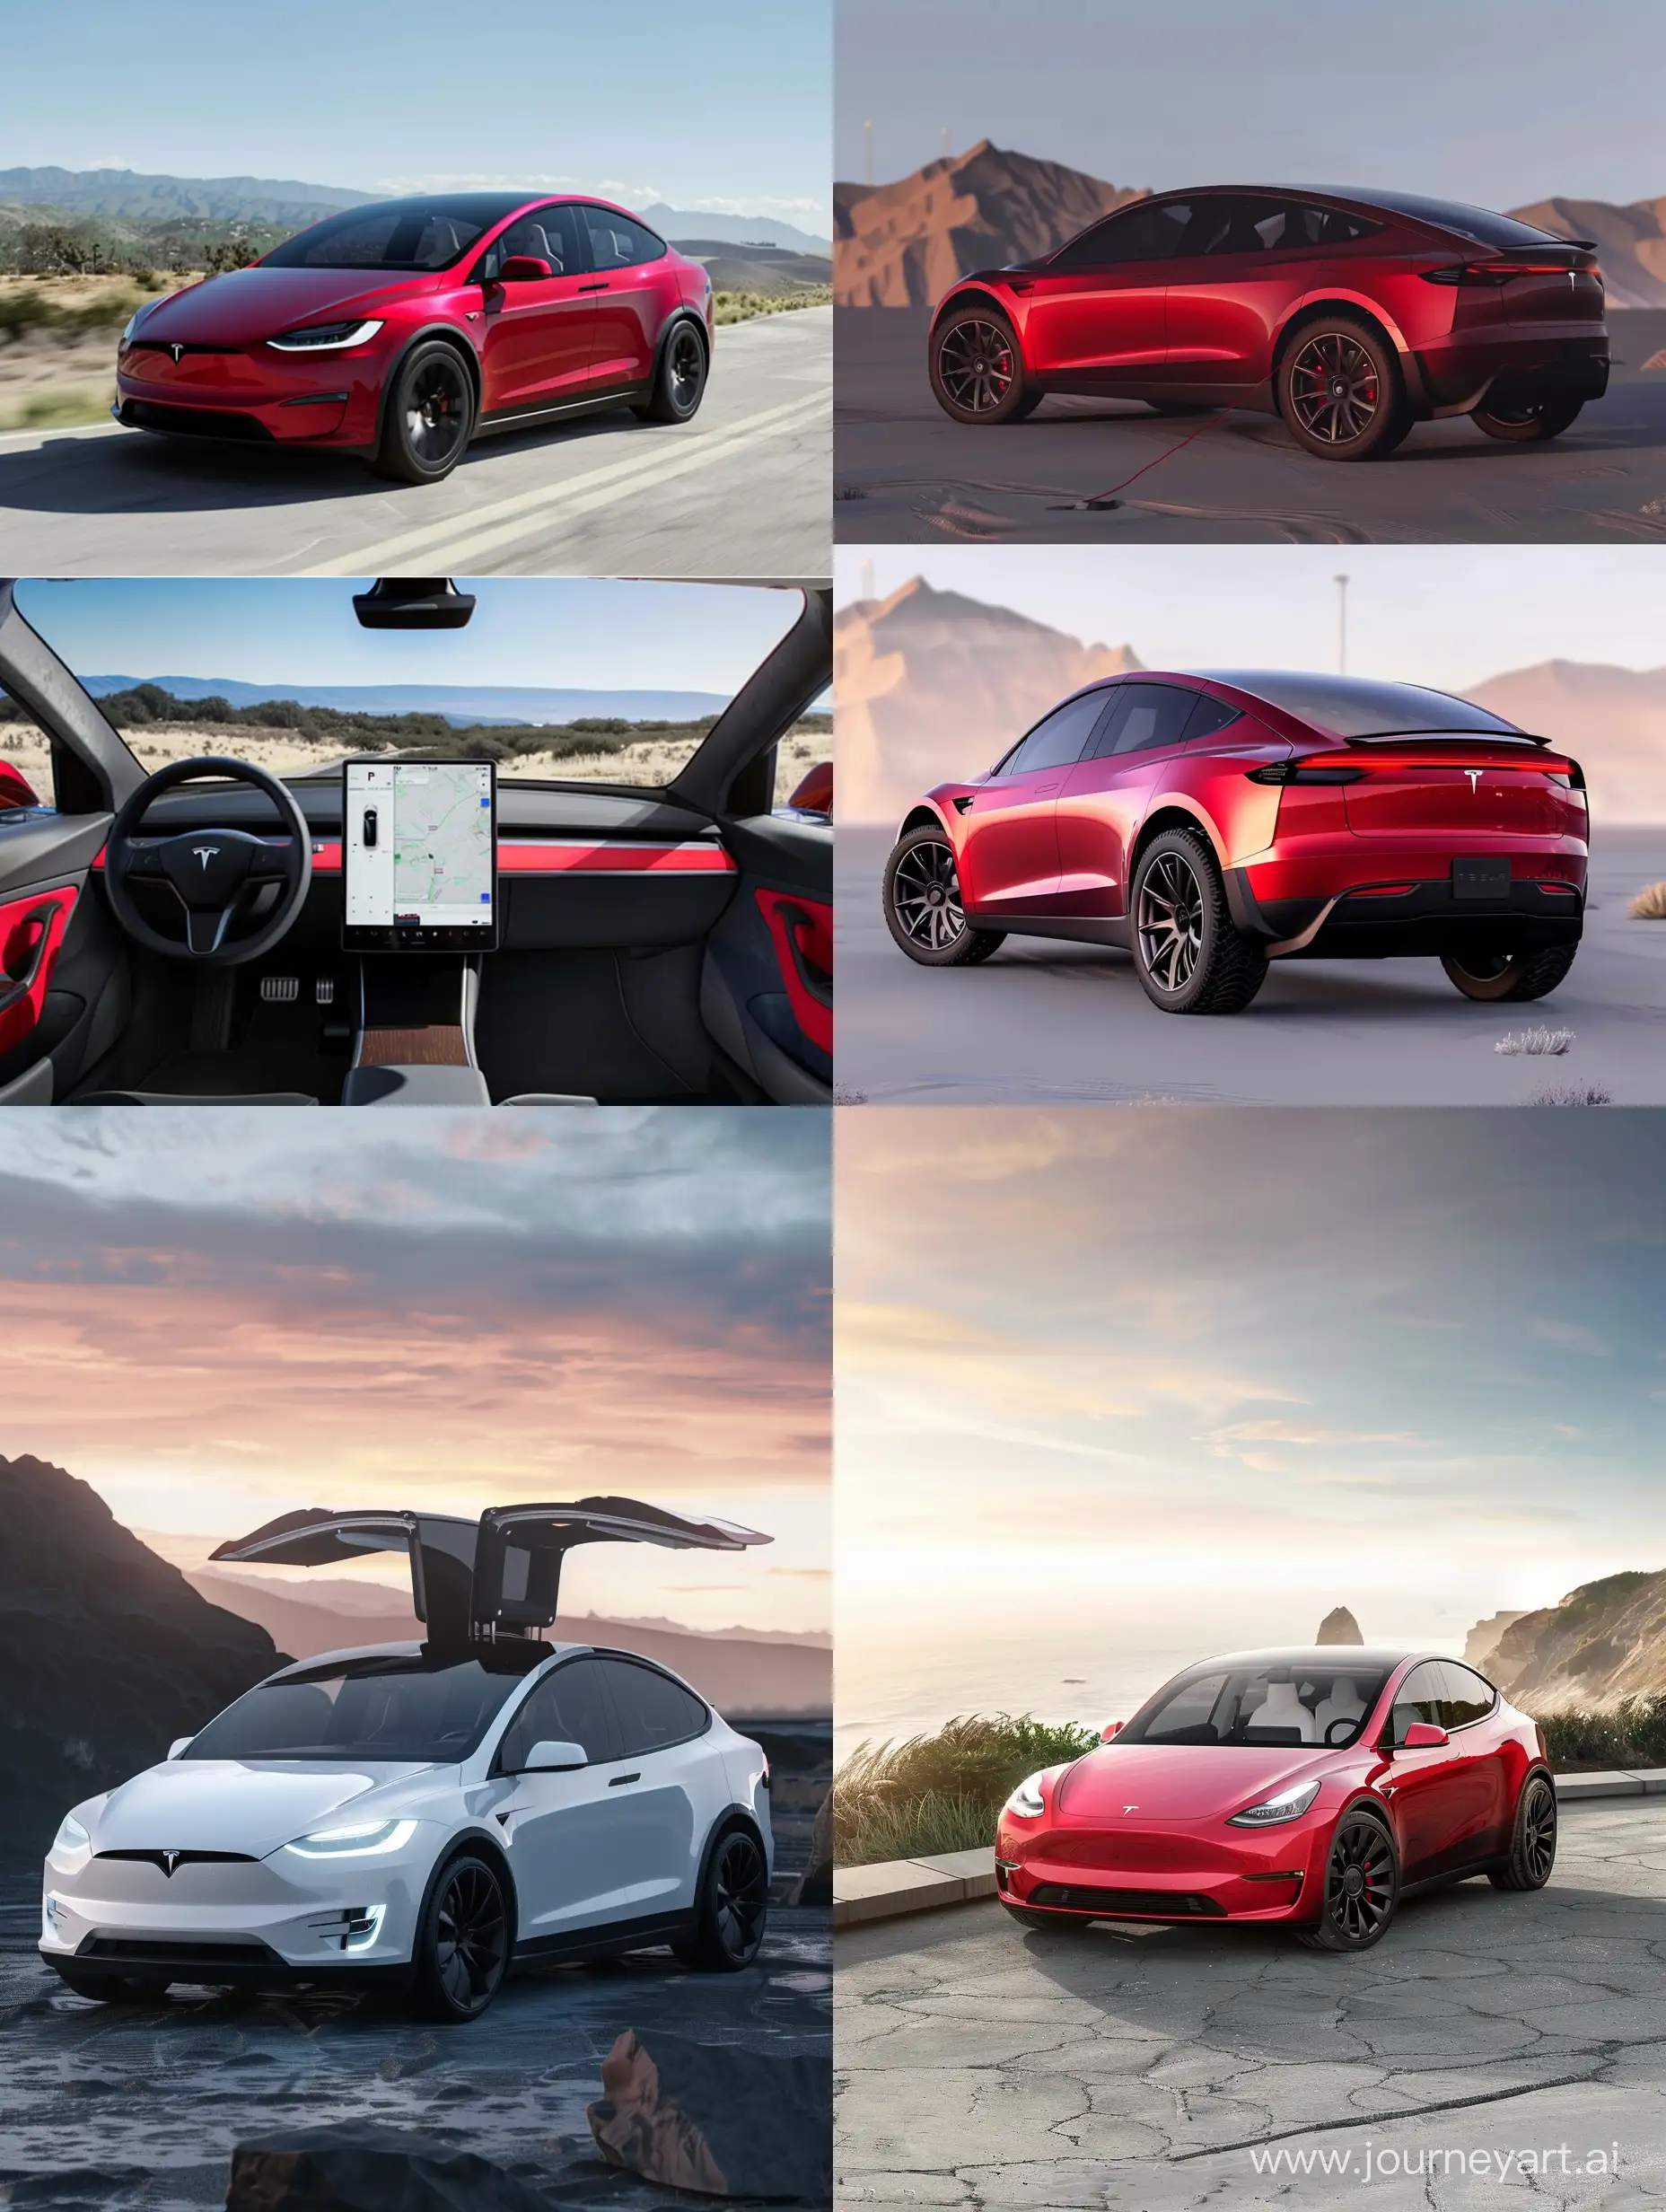 Futuristic-Tesla-Cars-in-2050-CuttingEdge-Electric-Vehicles-Revolutionize-Transportation